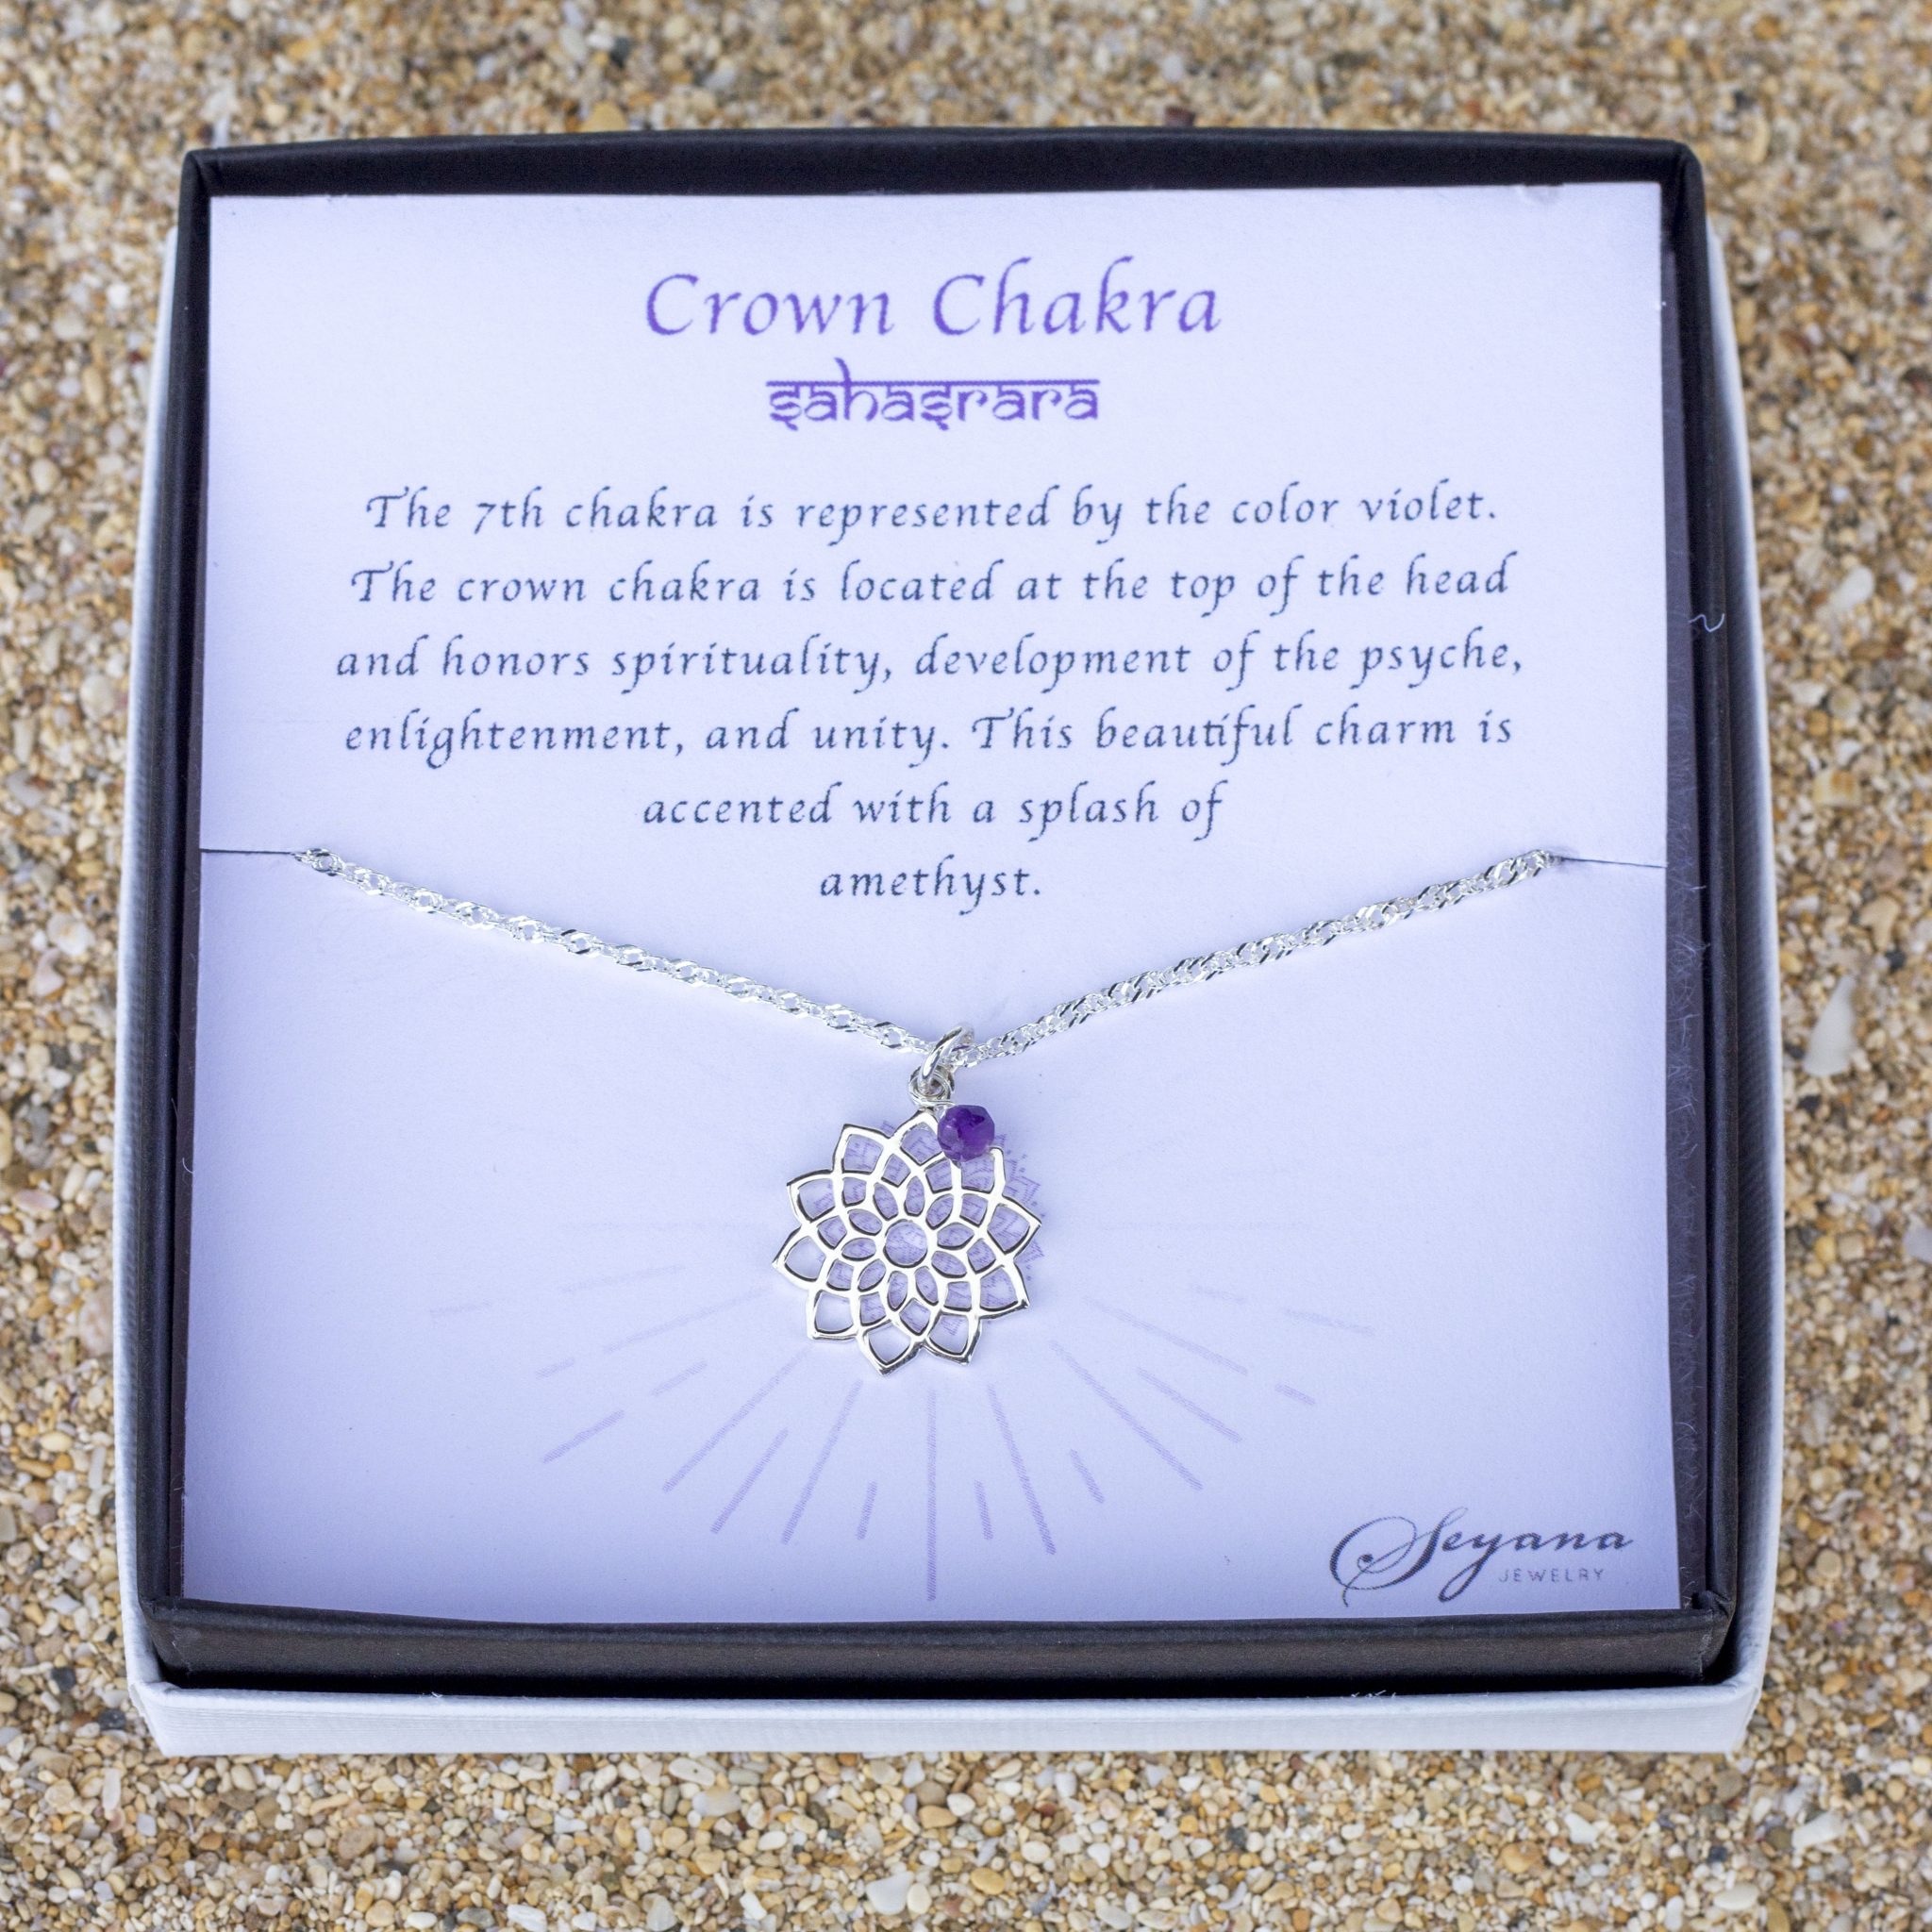 Crown Chakra Pendant - Sahasrara - Seyana Jewelry